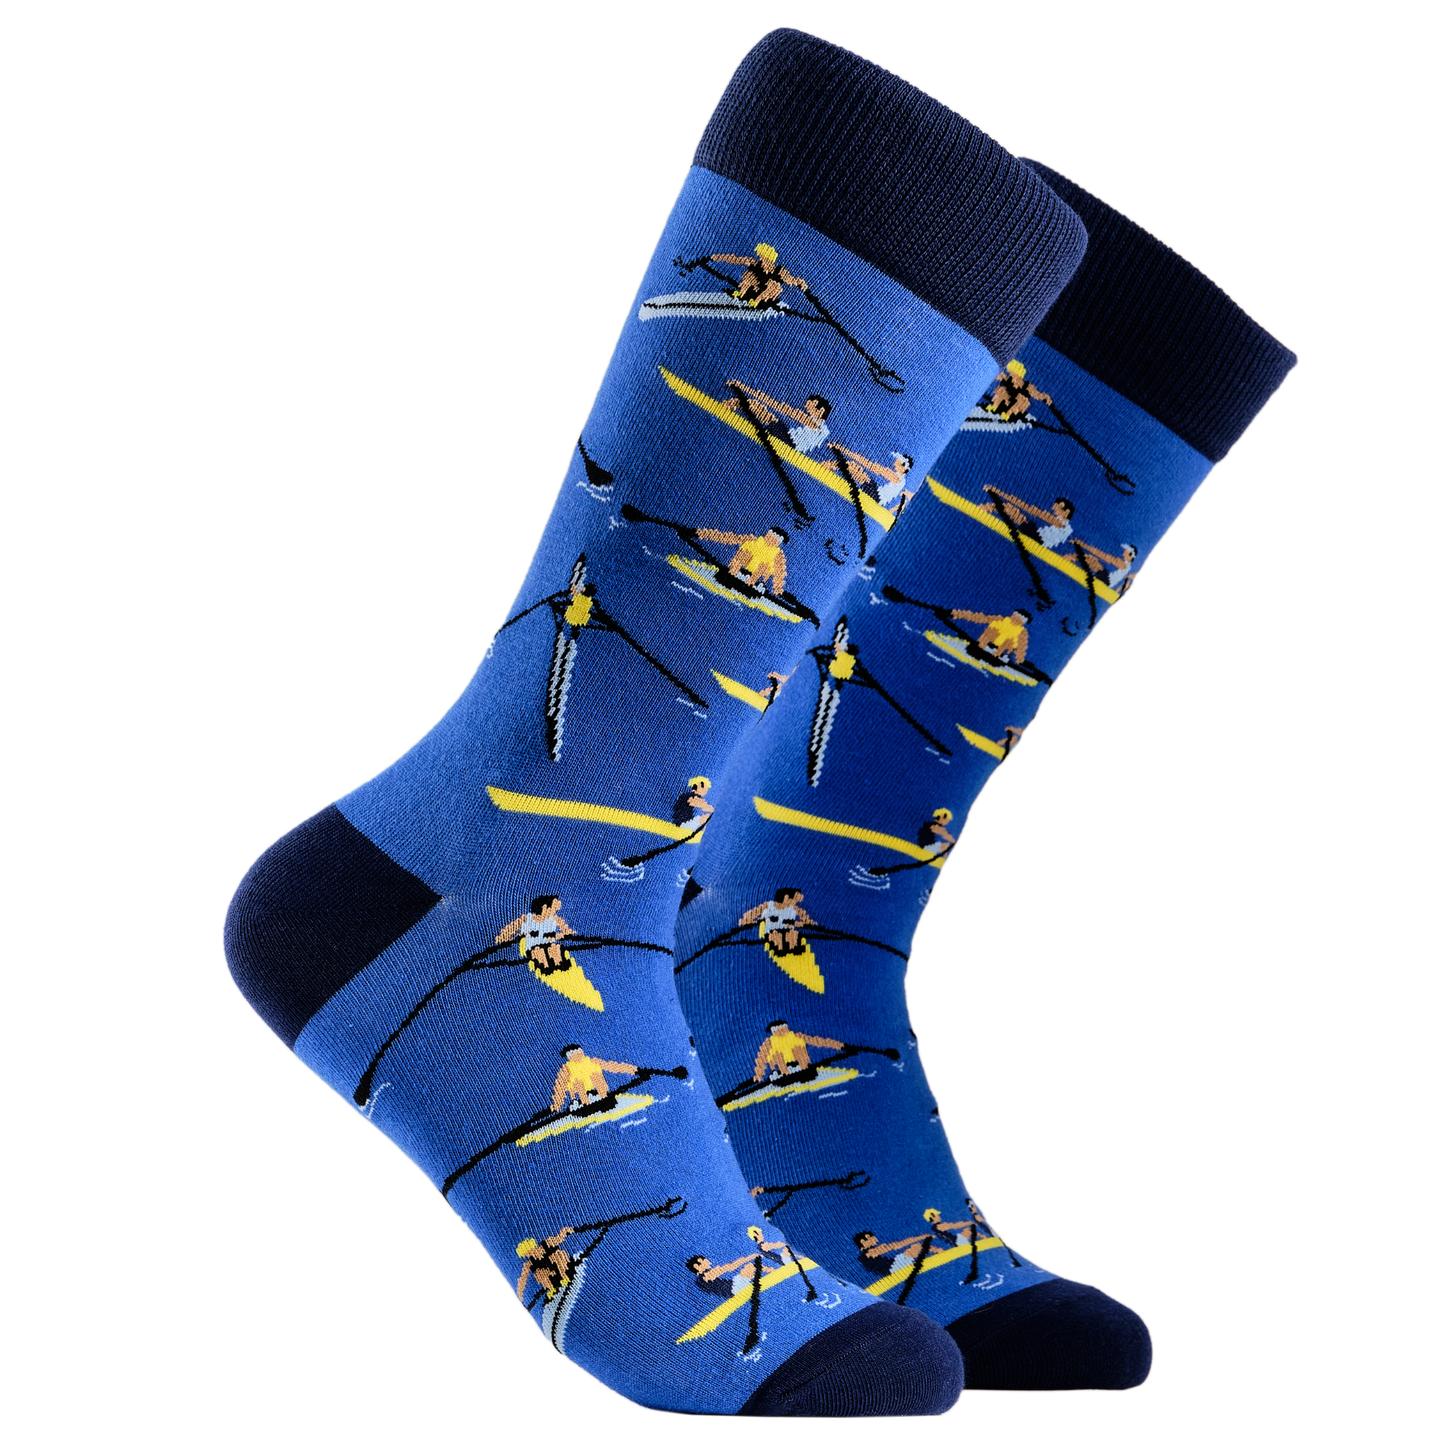 Rowing Socks. A pair of socks depicting row boat racers. Blue legs, dark blue cuff, heel and toe.